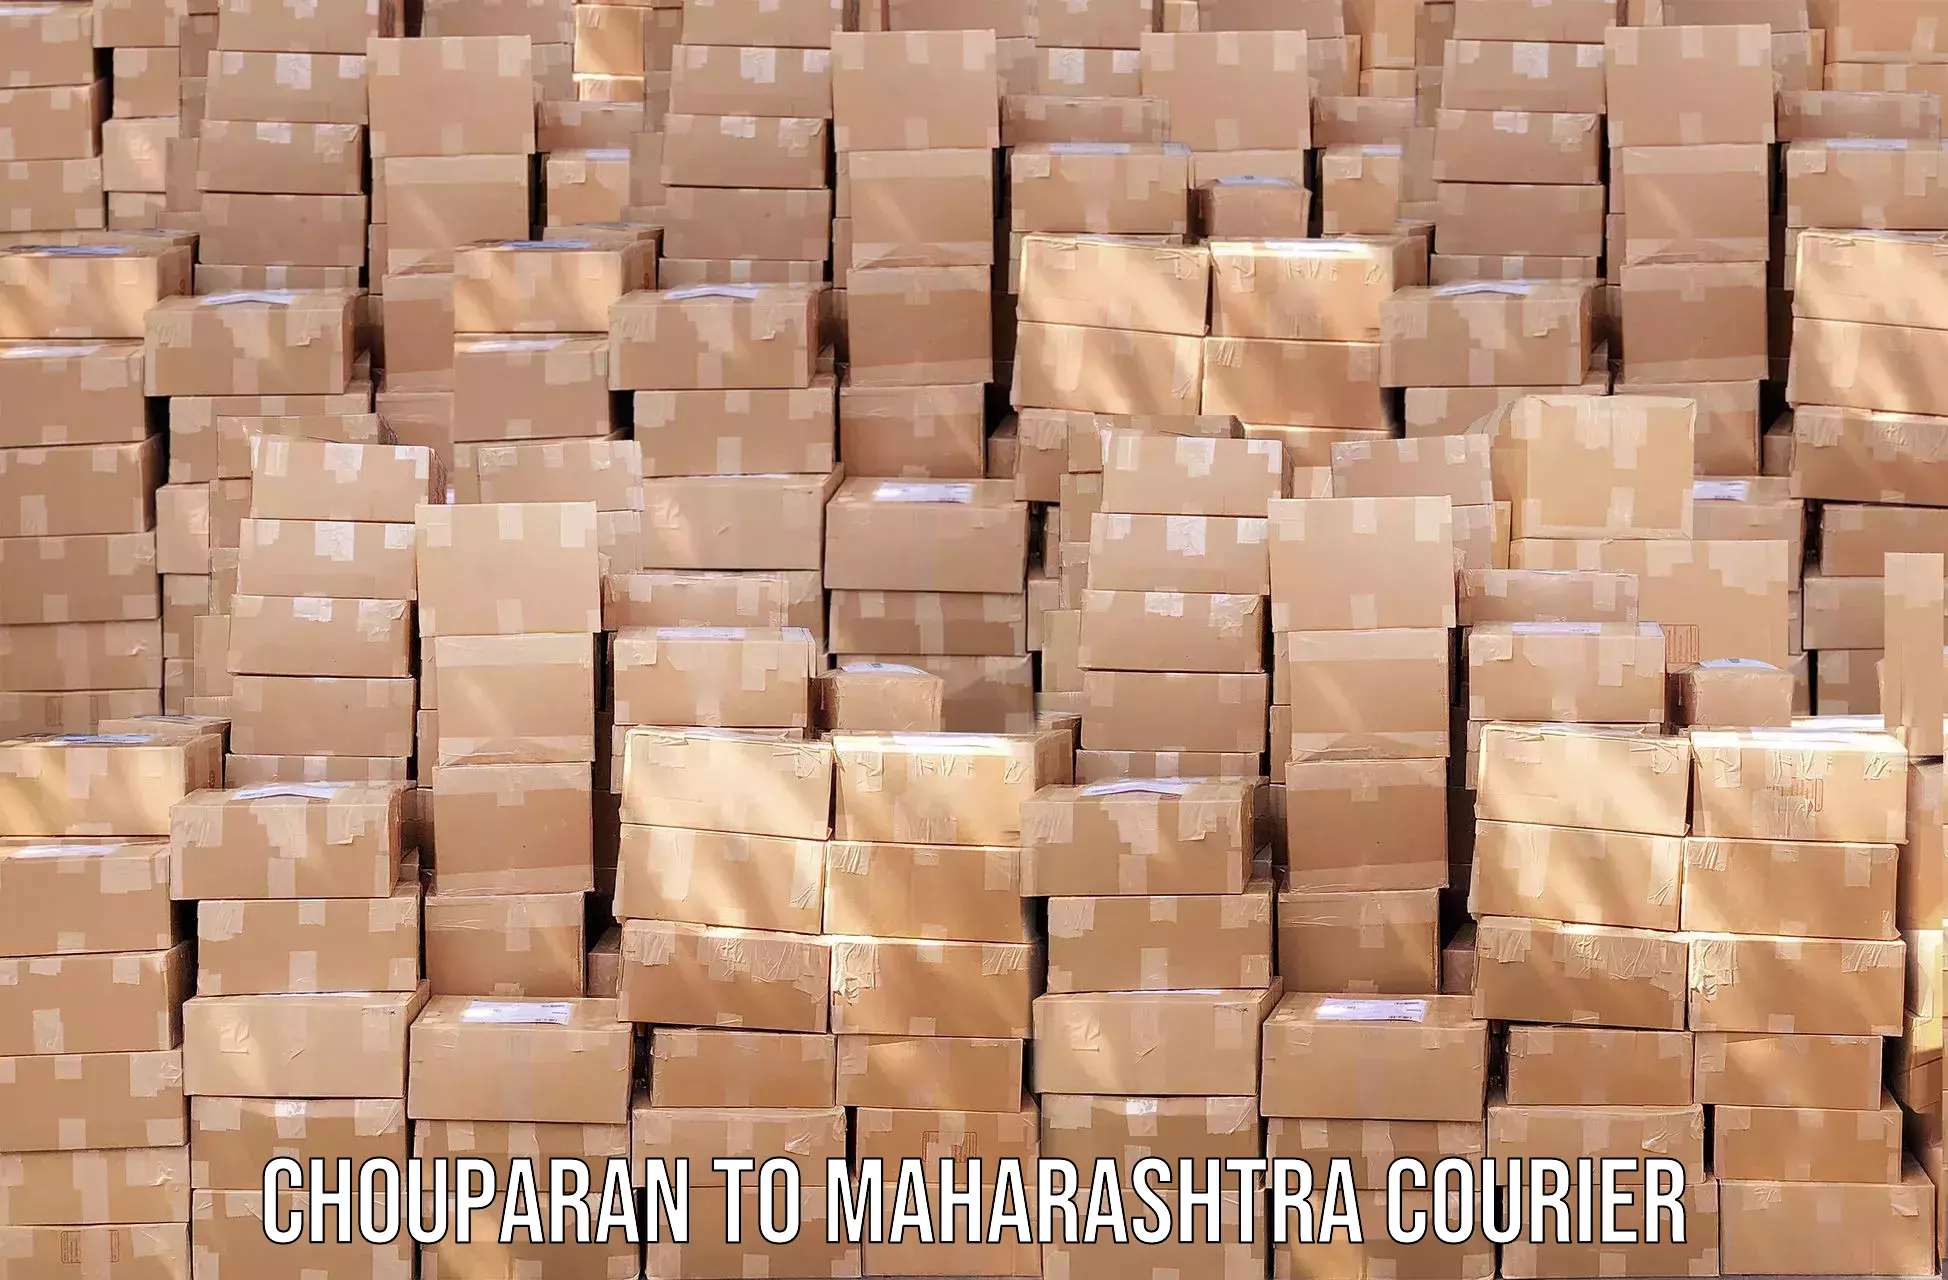 High-speed parcel service Chouparan to Maharashtra